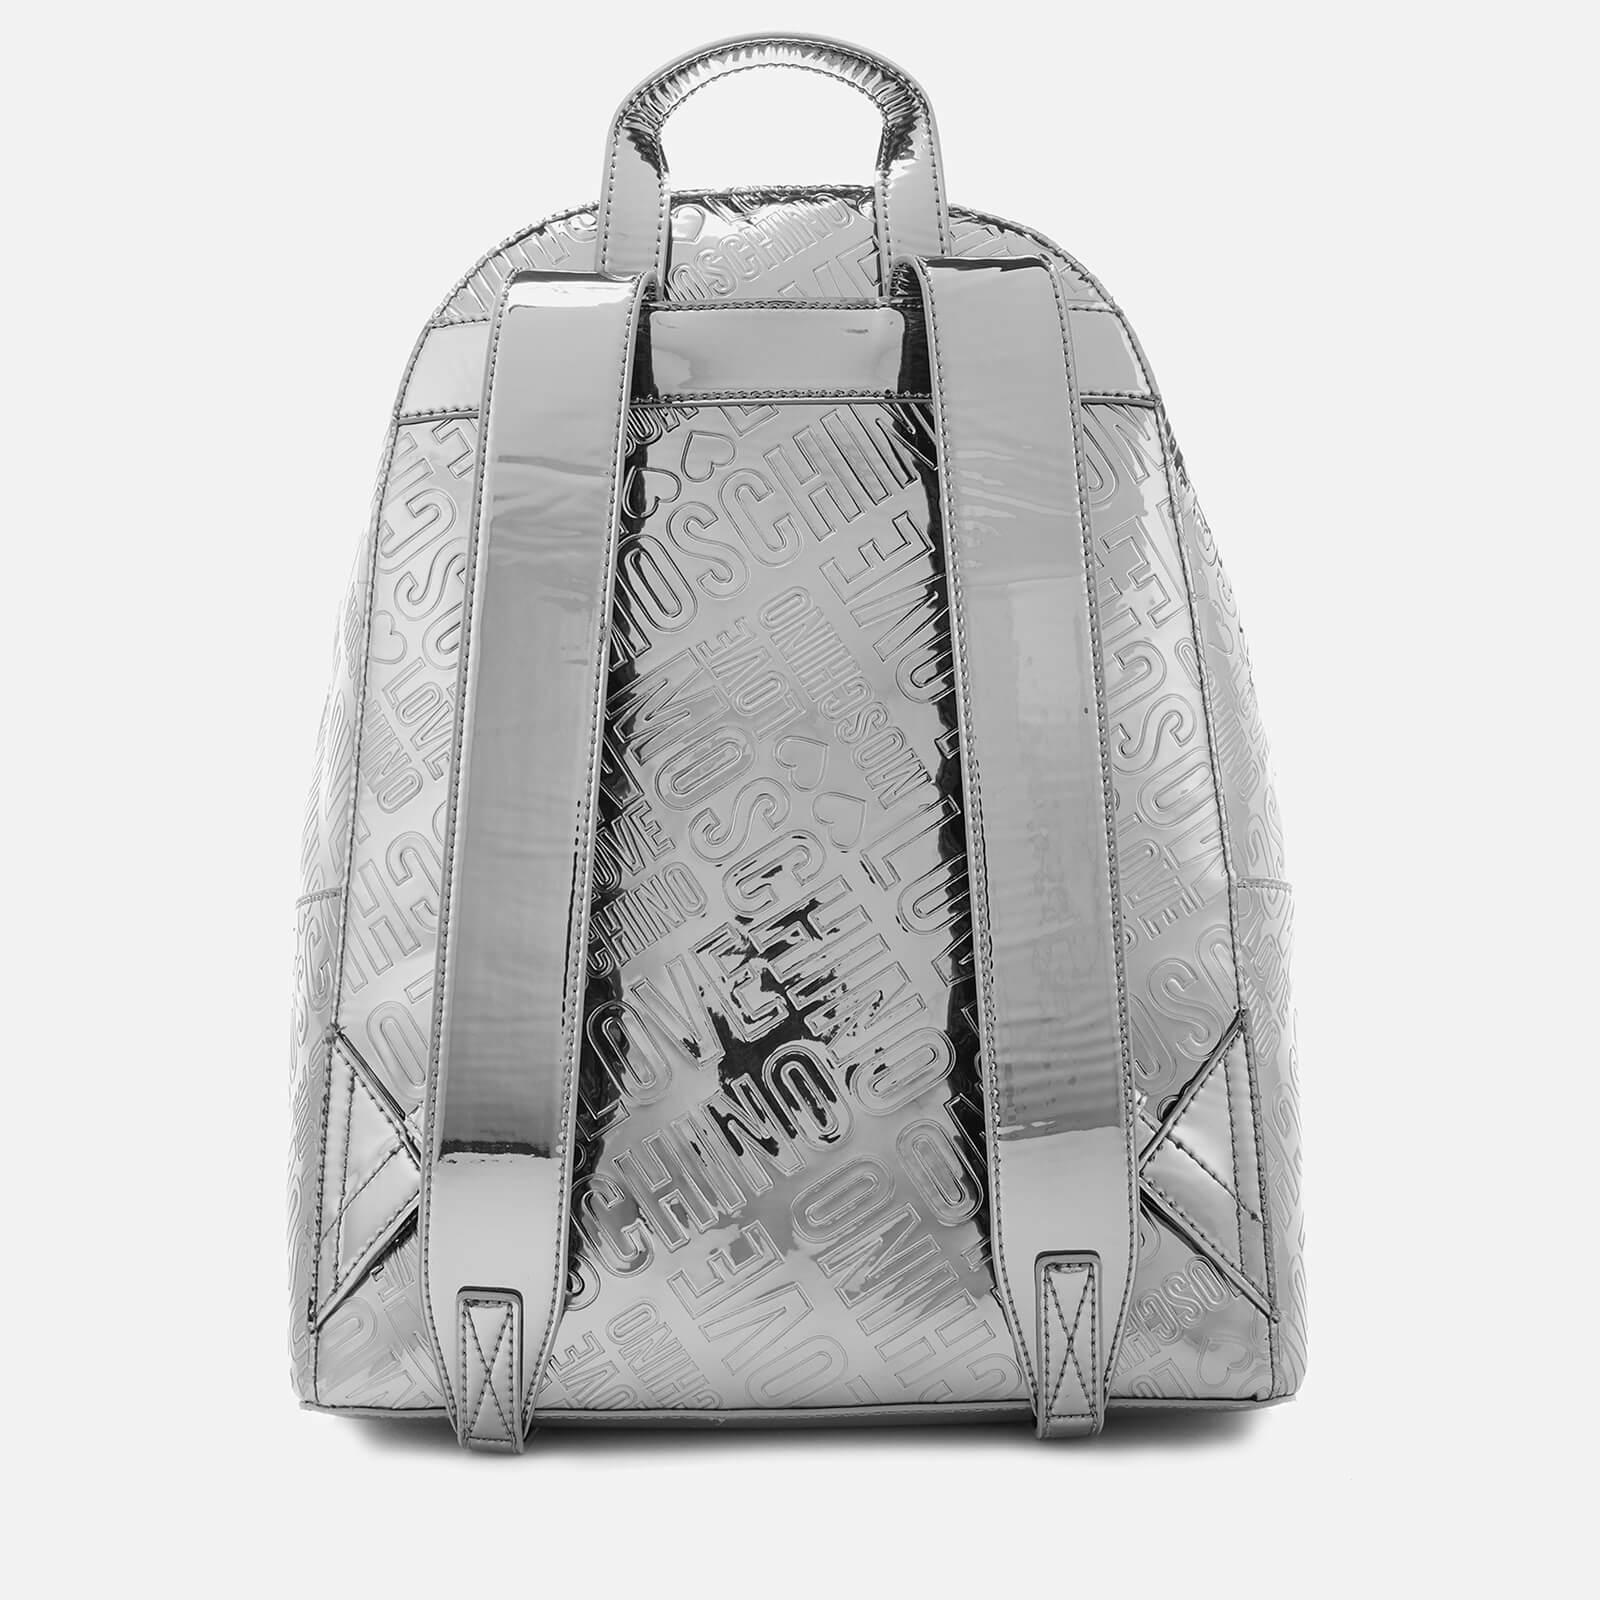 love moschino silver bag